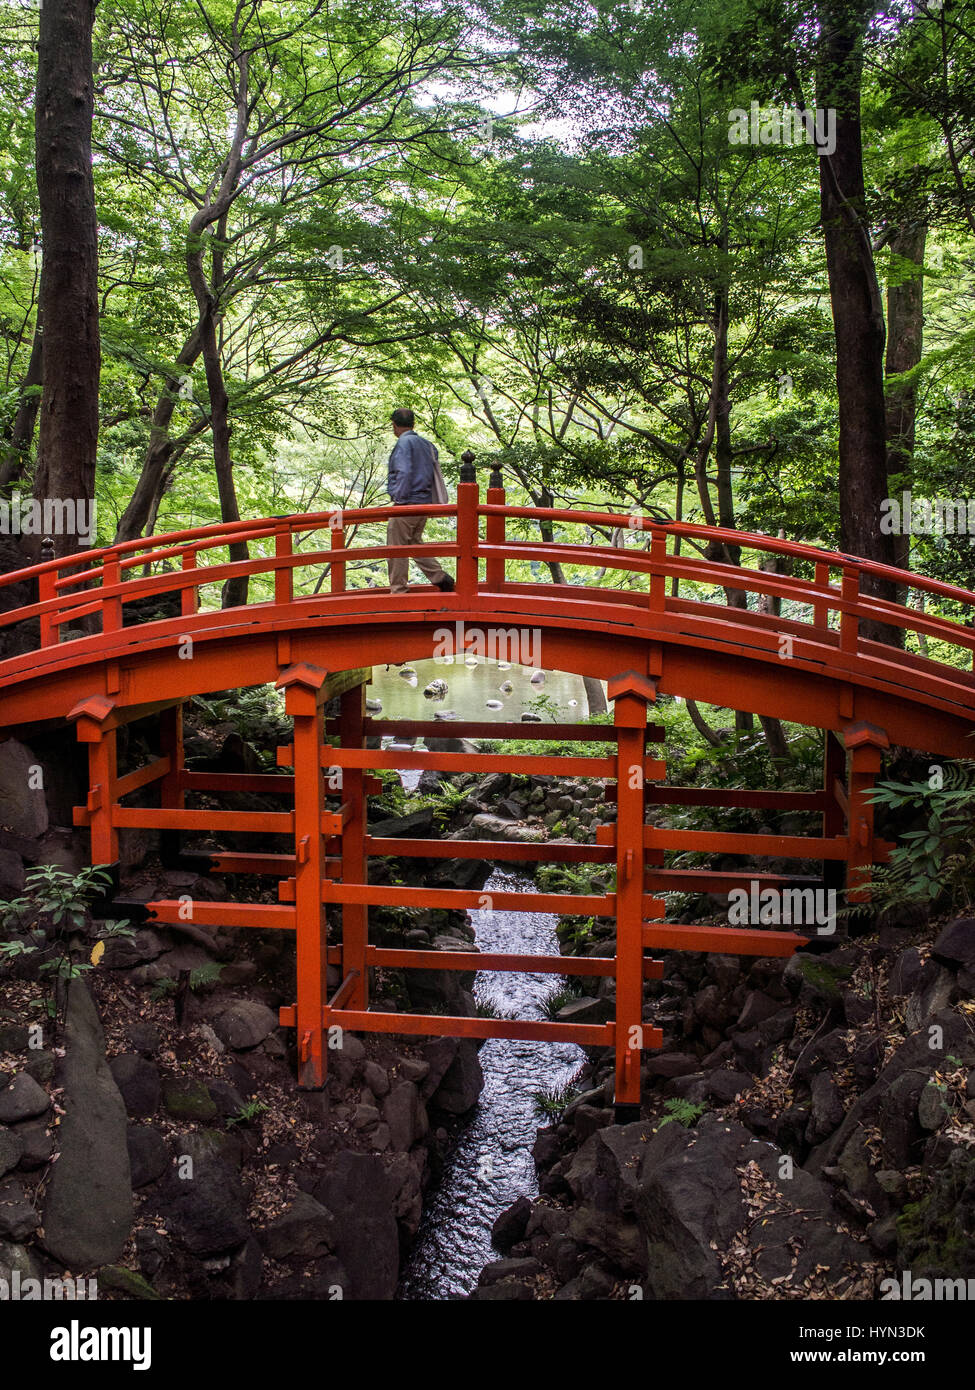 ,L'uomo cammina su red curvo ponte in legno nel tradizionale giardino Giapponese. Koishikawa Korakuen, Bunkyo-ku, Tokyo, Giappone Foto Stock